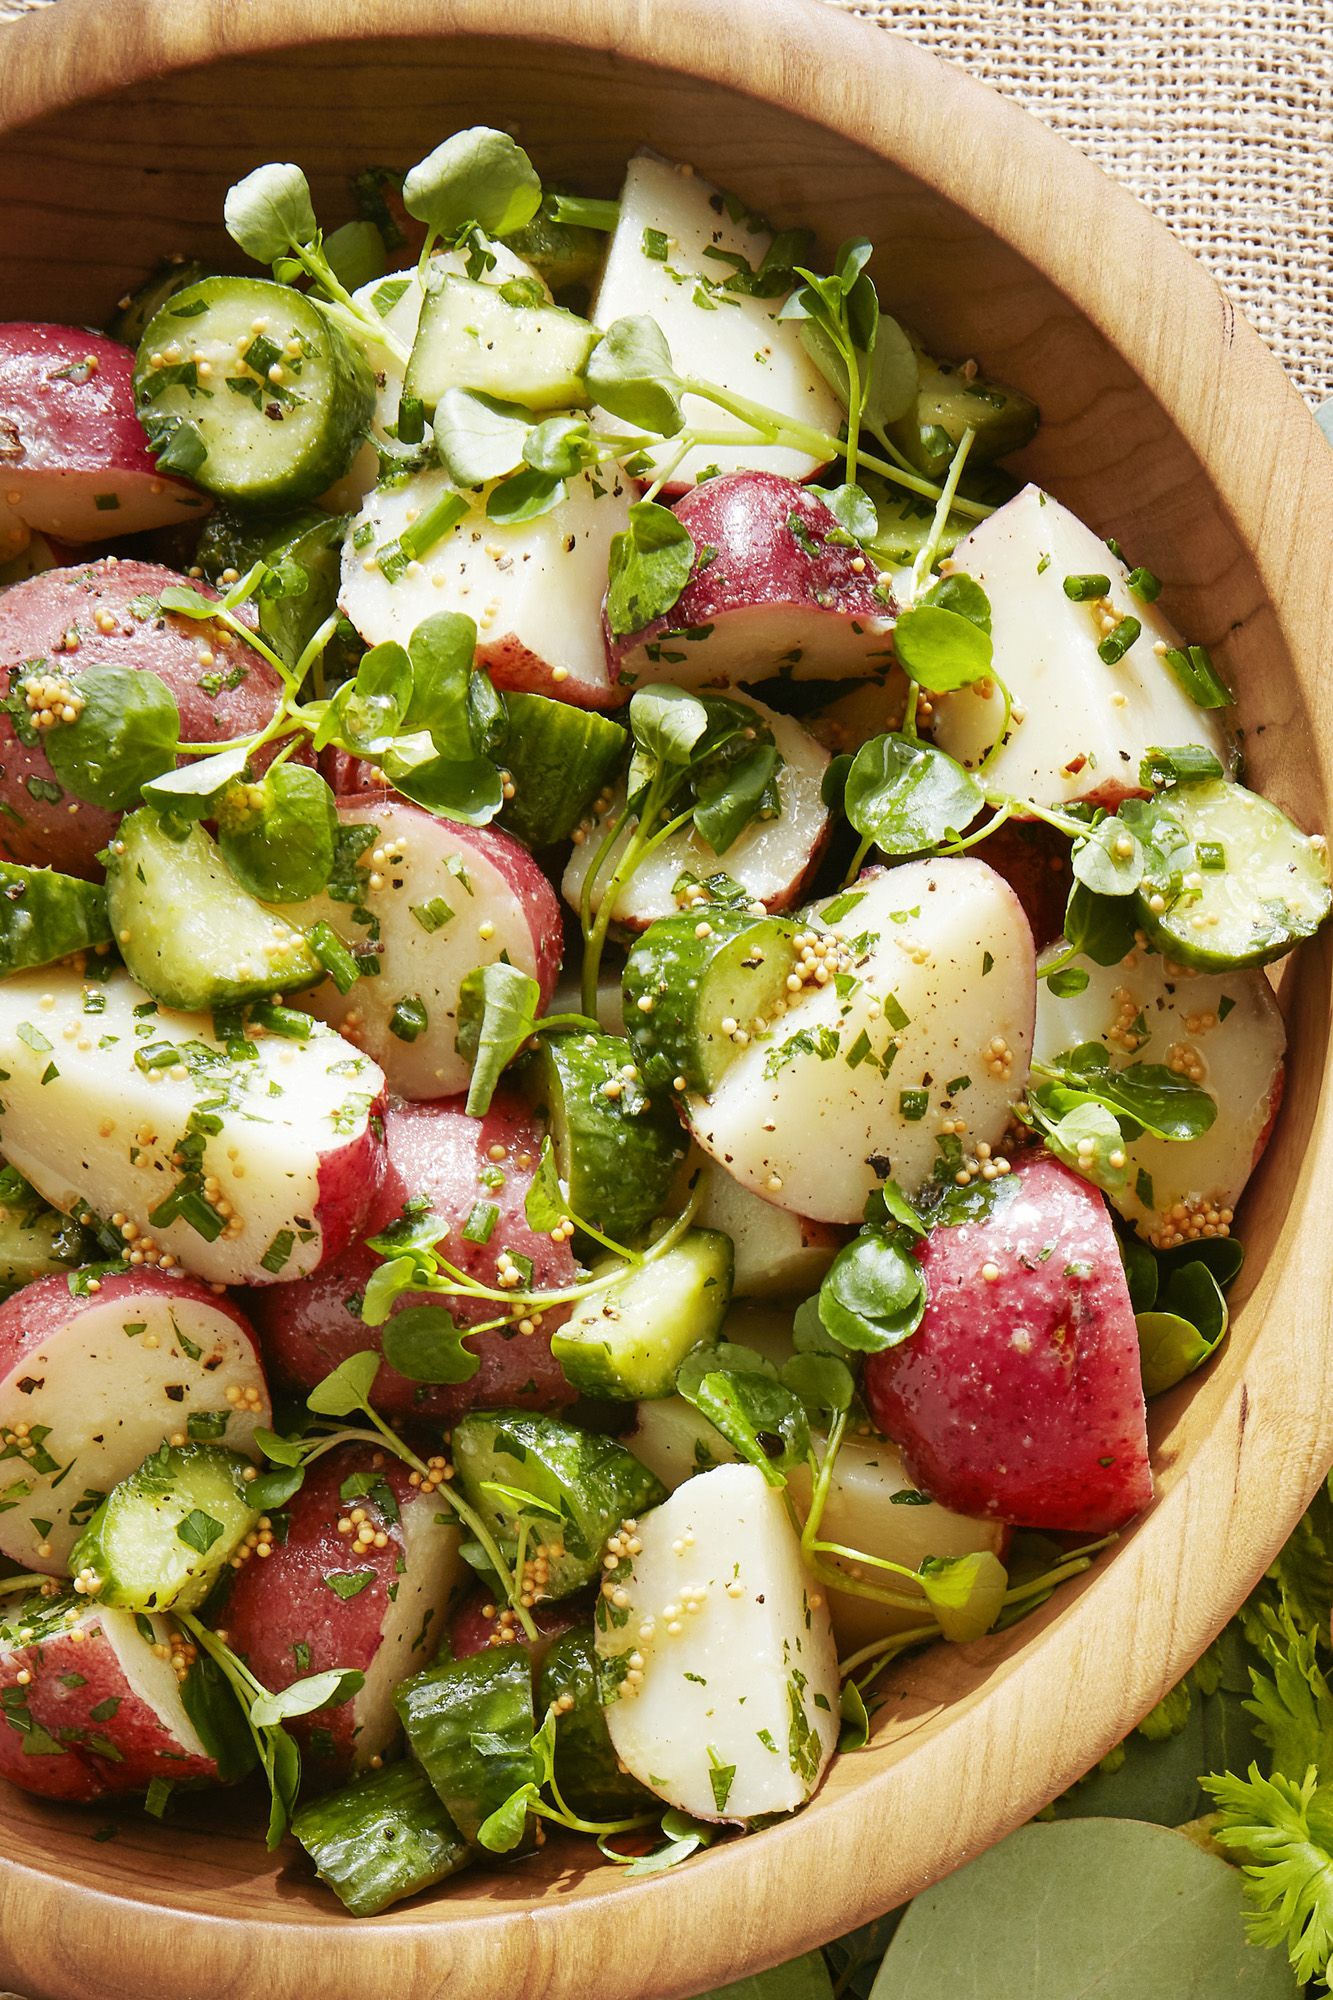 25 Best Potato Salad Recipes Easy Homemade Potato Salad Ideas